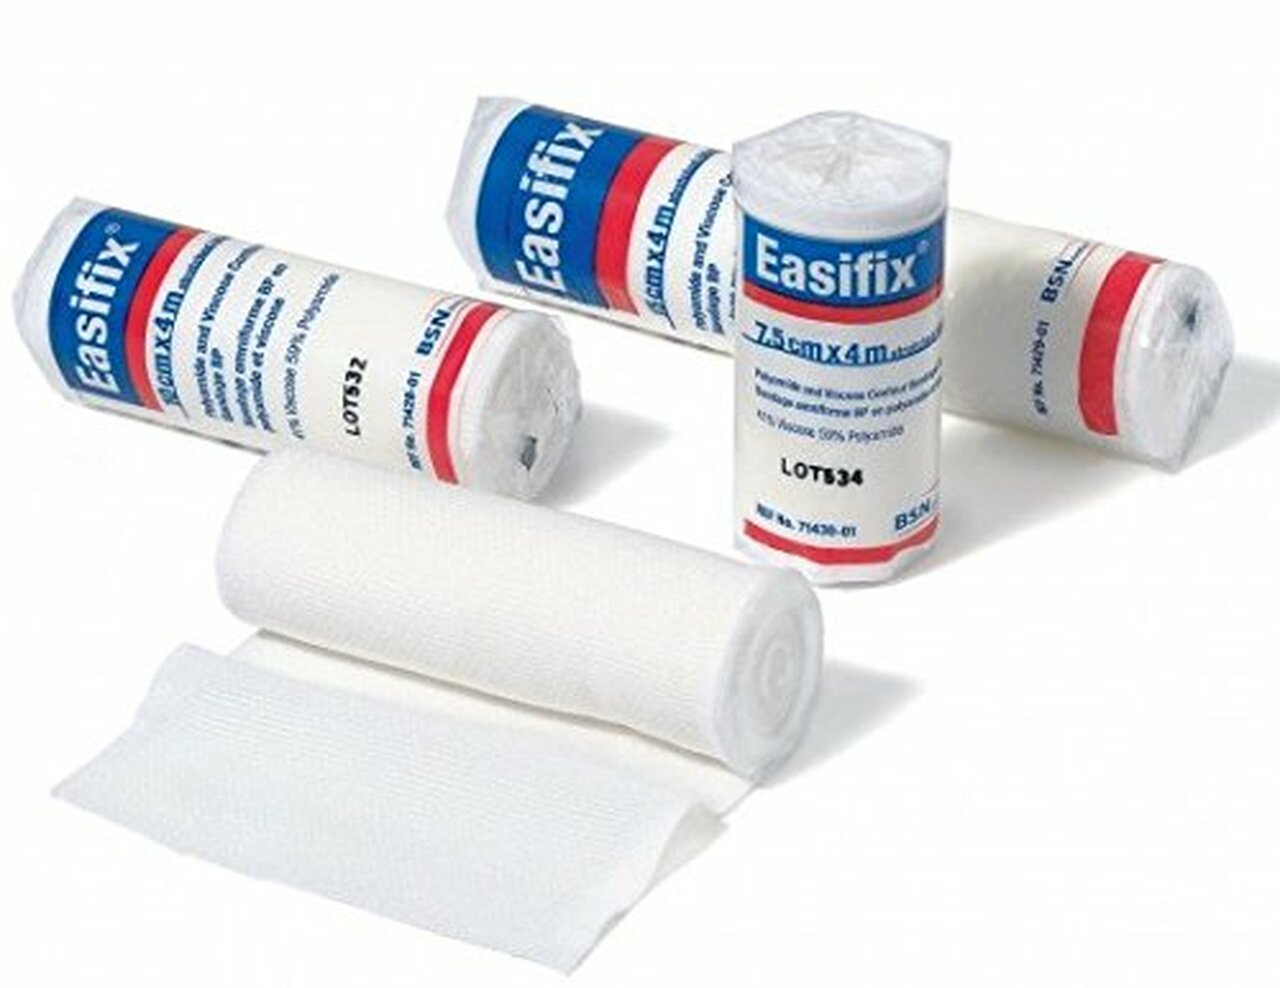 Bg/20 Easifix Superior Non-Adhesive Fixation Bandage 7.5cm X 4m (Stretched) - Home Health Store Inc